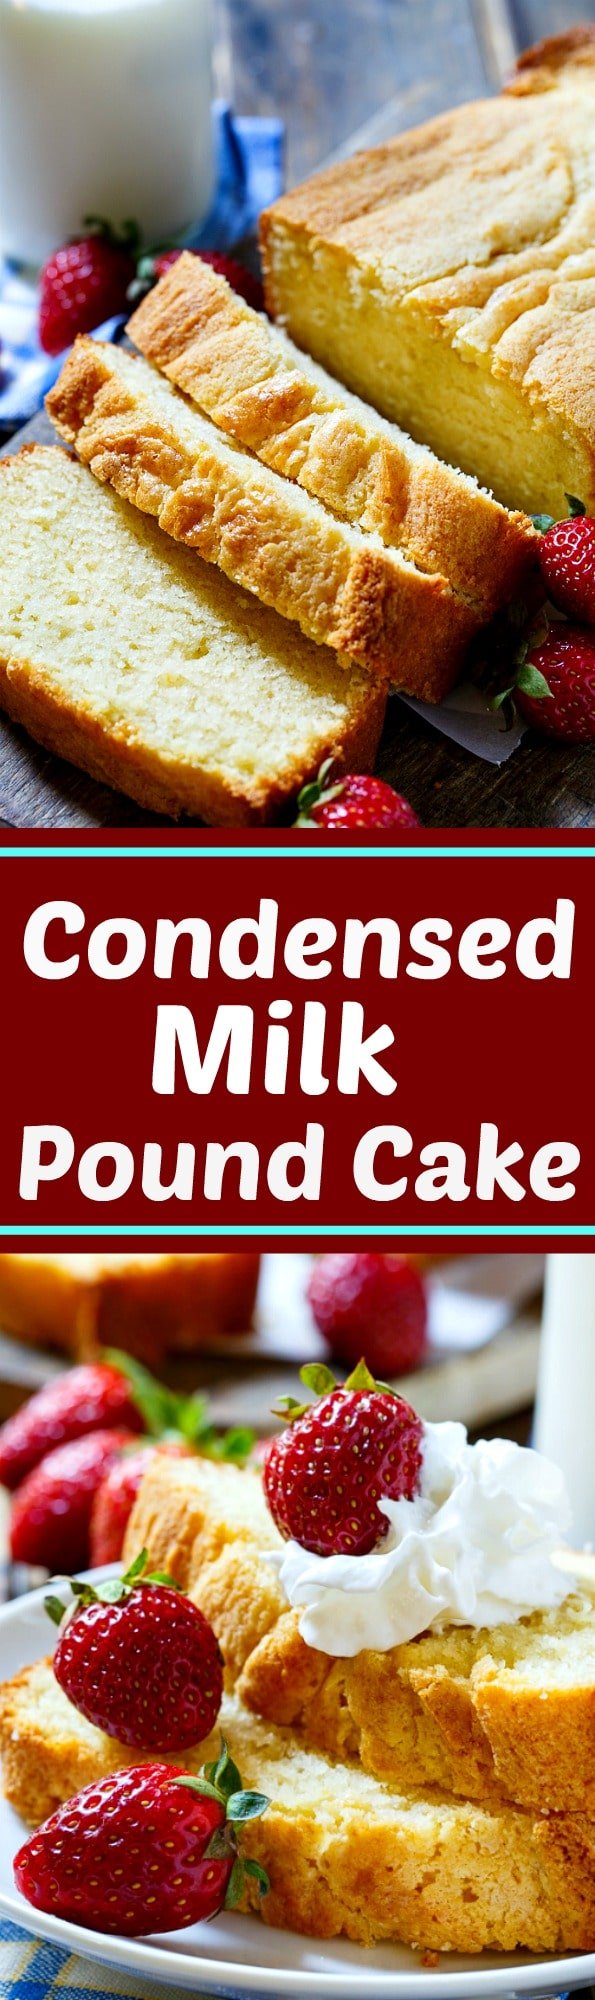 Condensed Milk Pound Cake